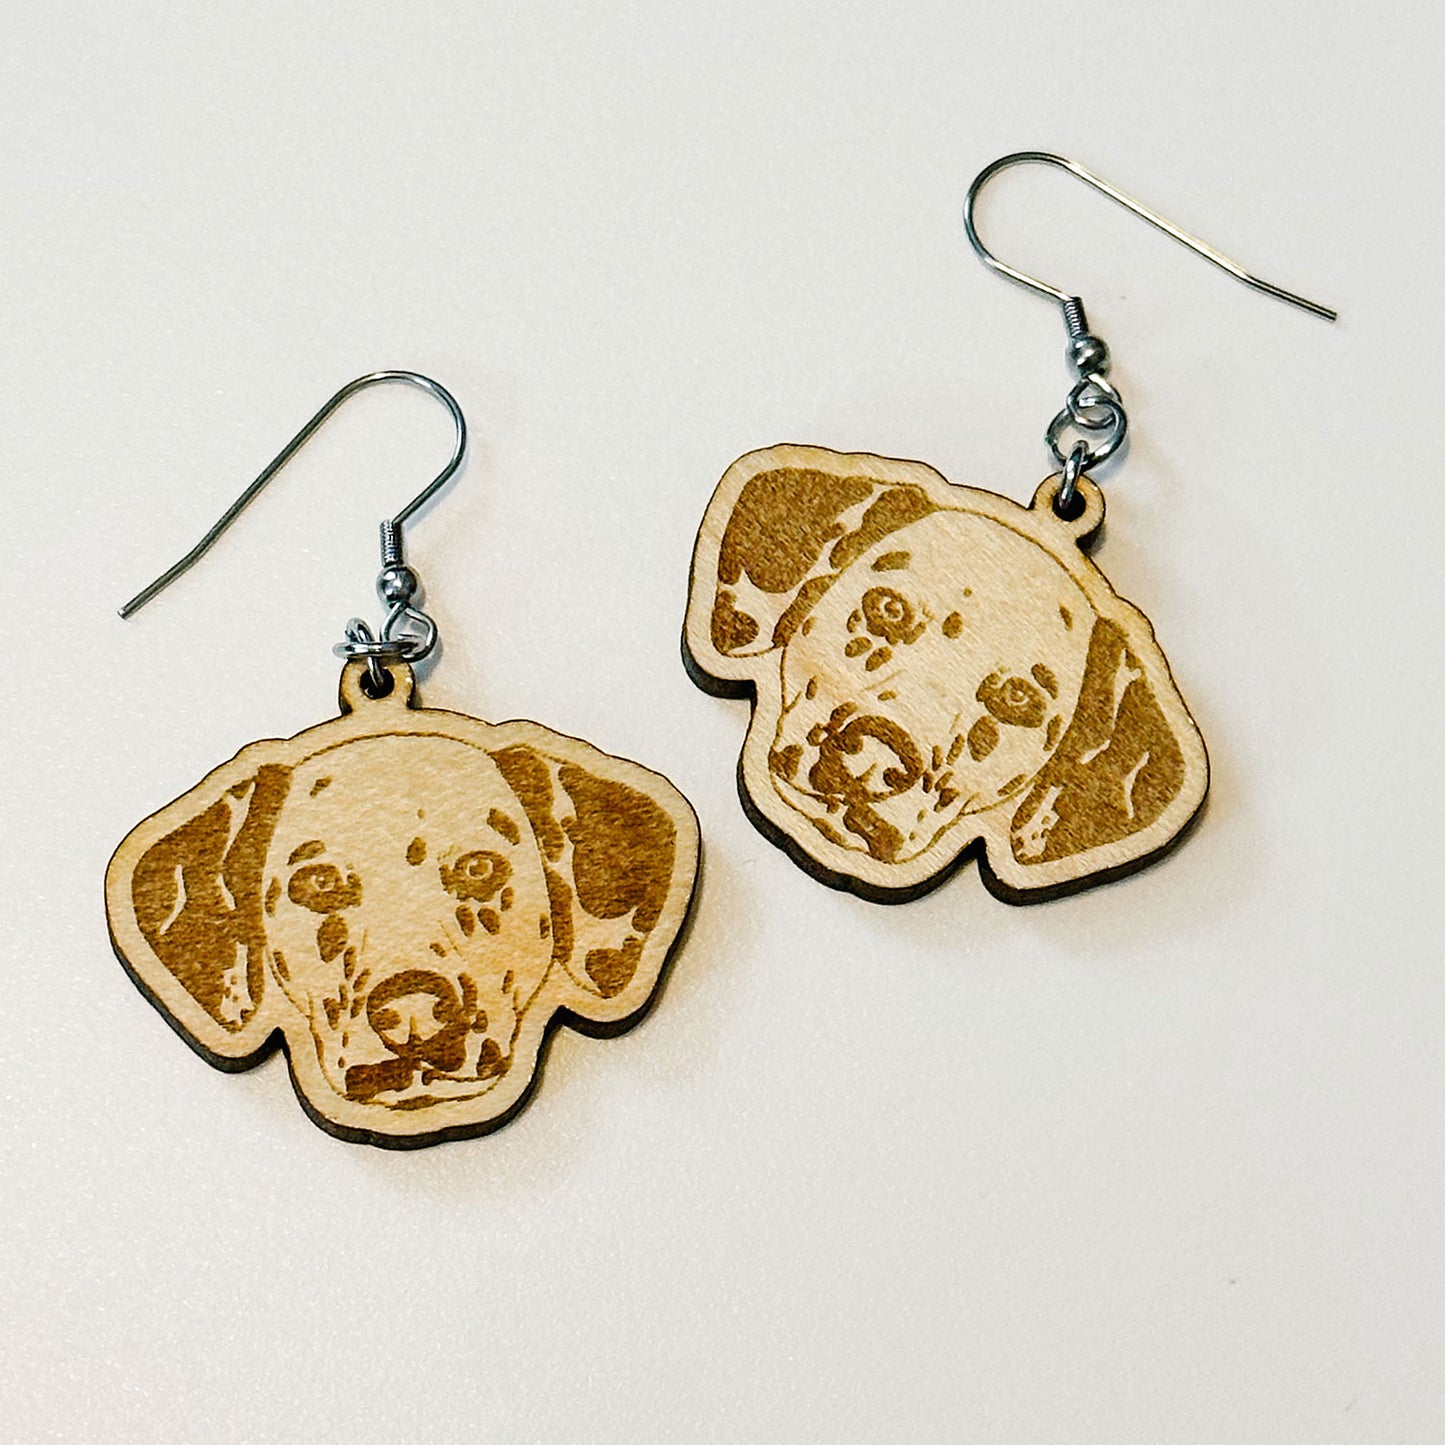 Engraved Dog Breed Earrings - Dalmatian